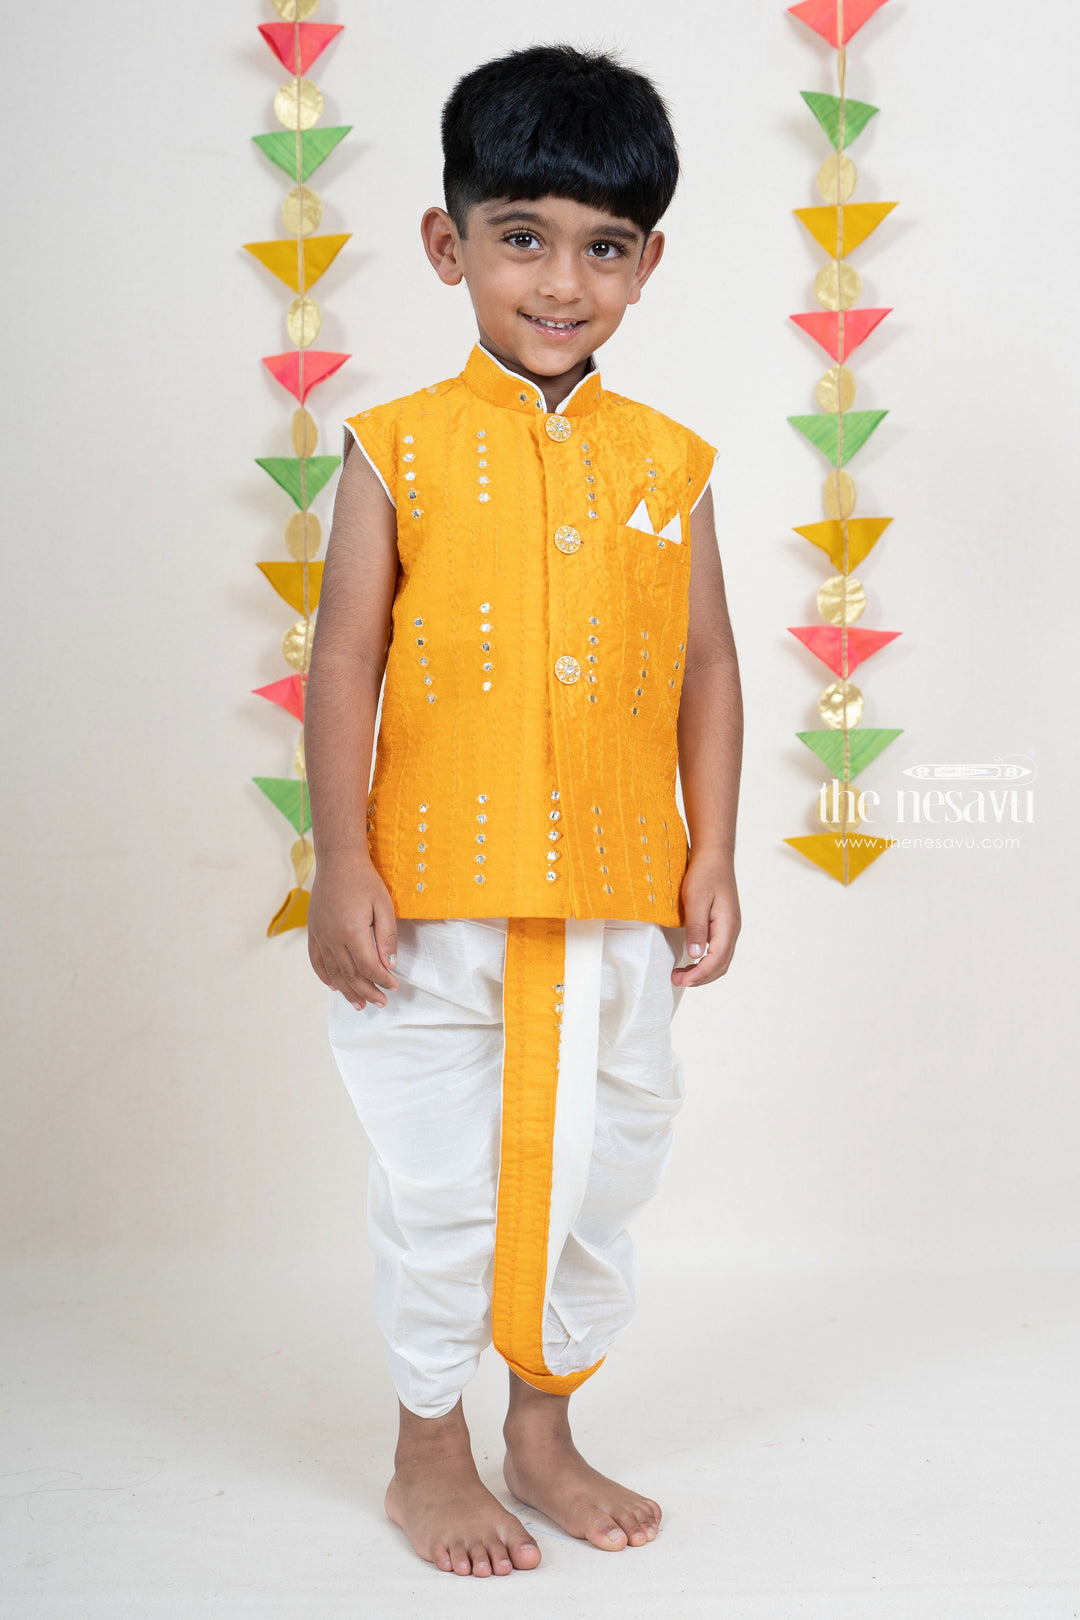 The Nesavu Ethnic Sets Mustard Designer Party Wear Kurta Suit For New Born Baby Boys psr silks Nesavu 12 (3M) / goldenrod BES216D